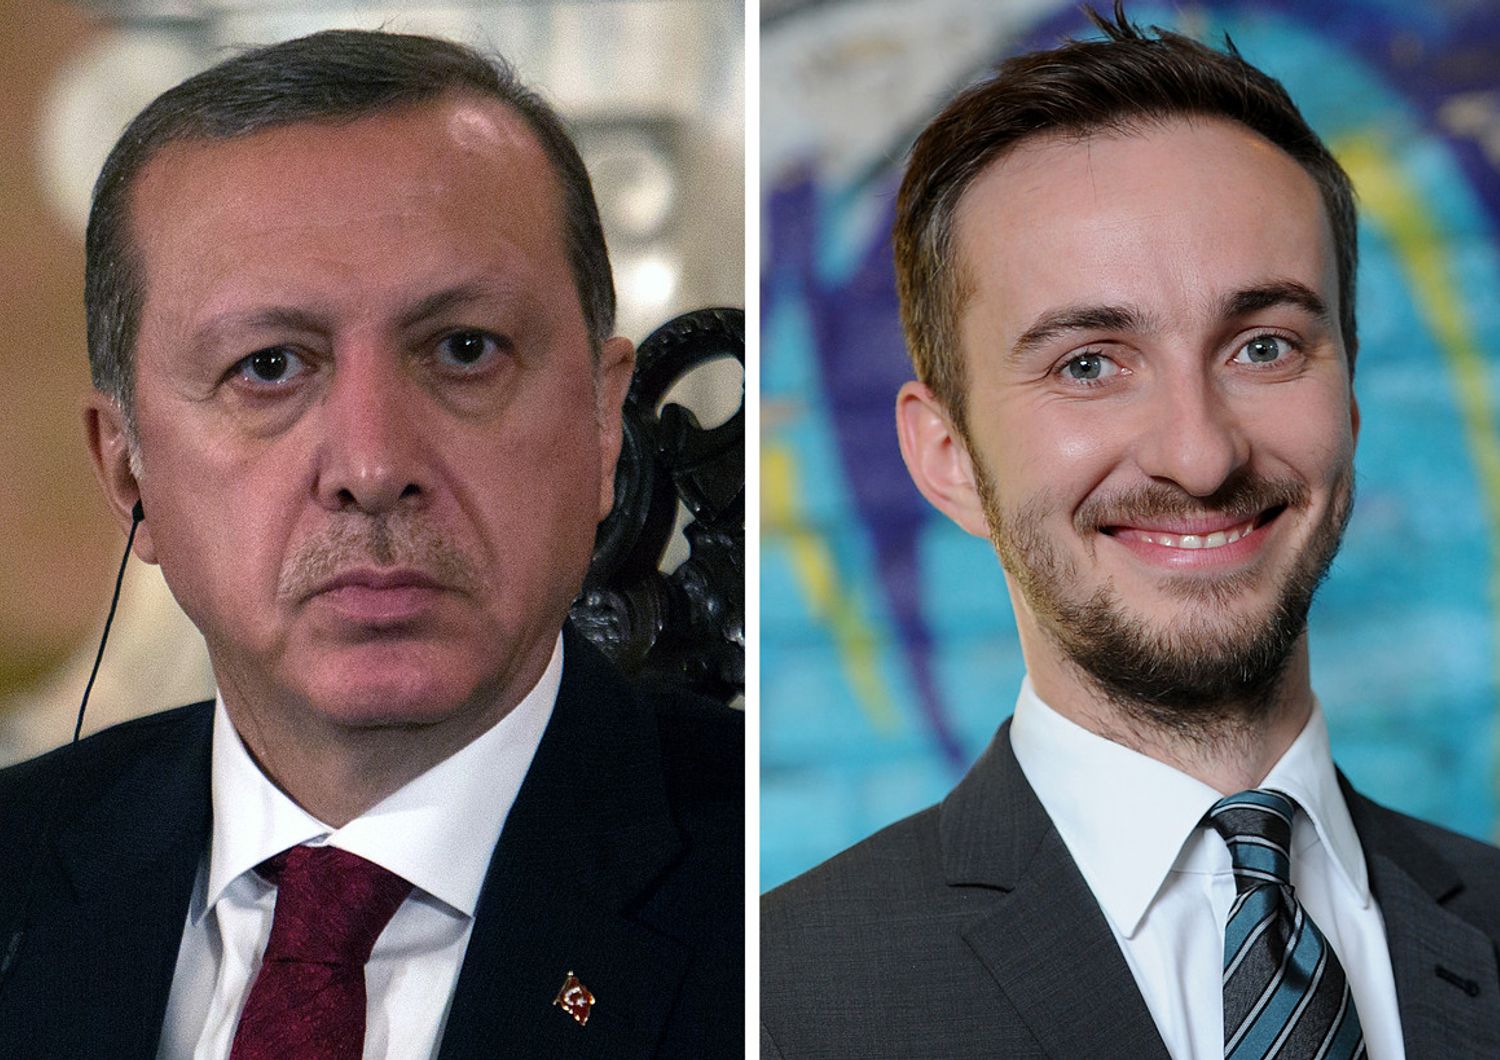 Tayyip Erdogan, presidente Turchia Jan Bohmermann, satiro (afp)&nbsp;